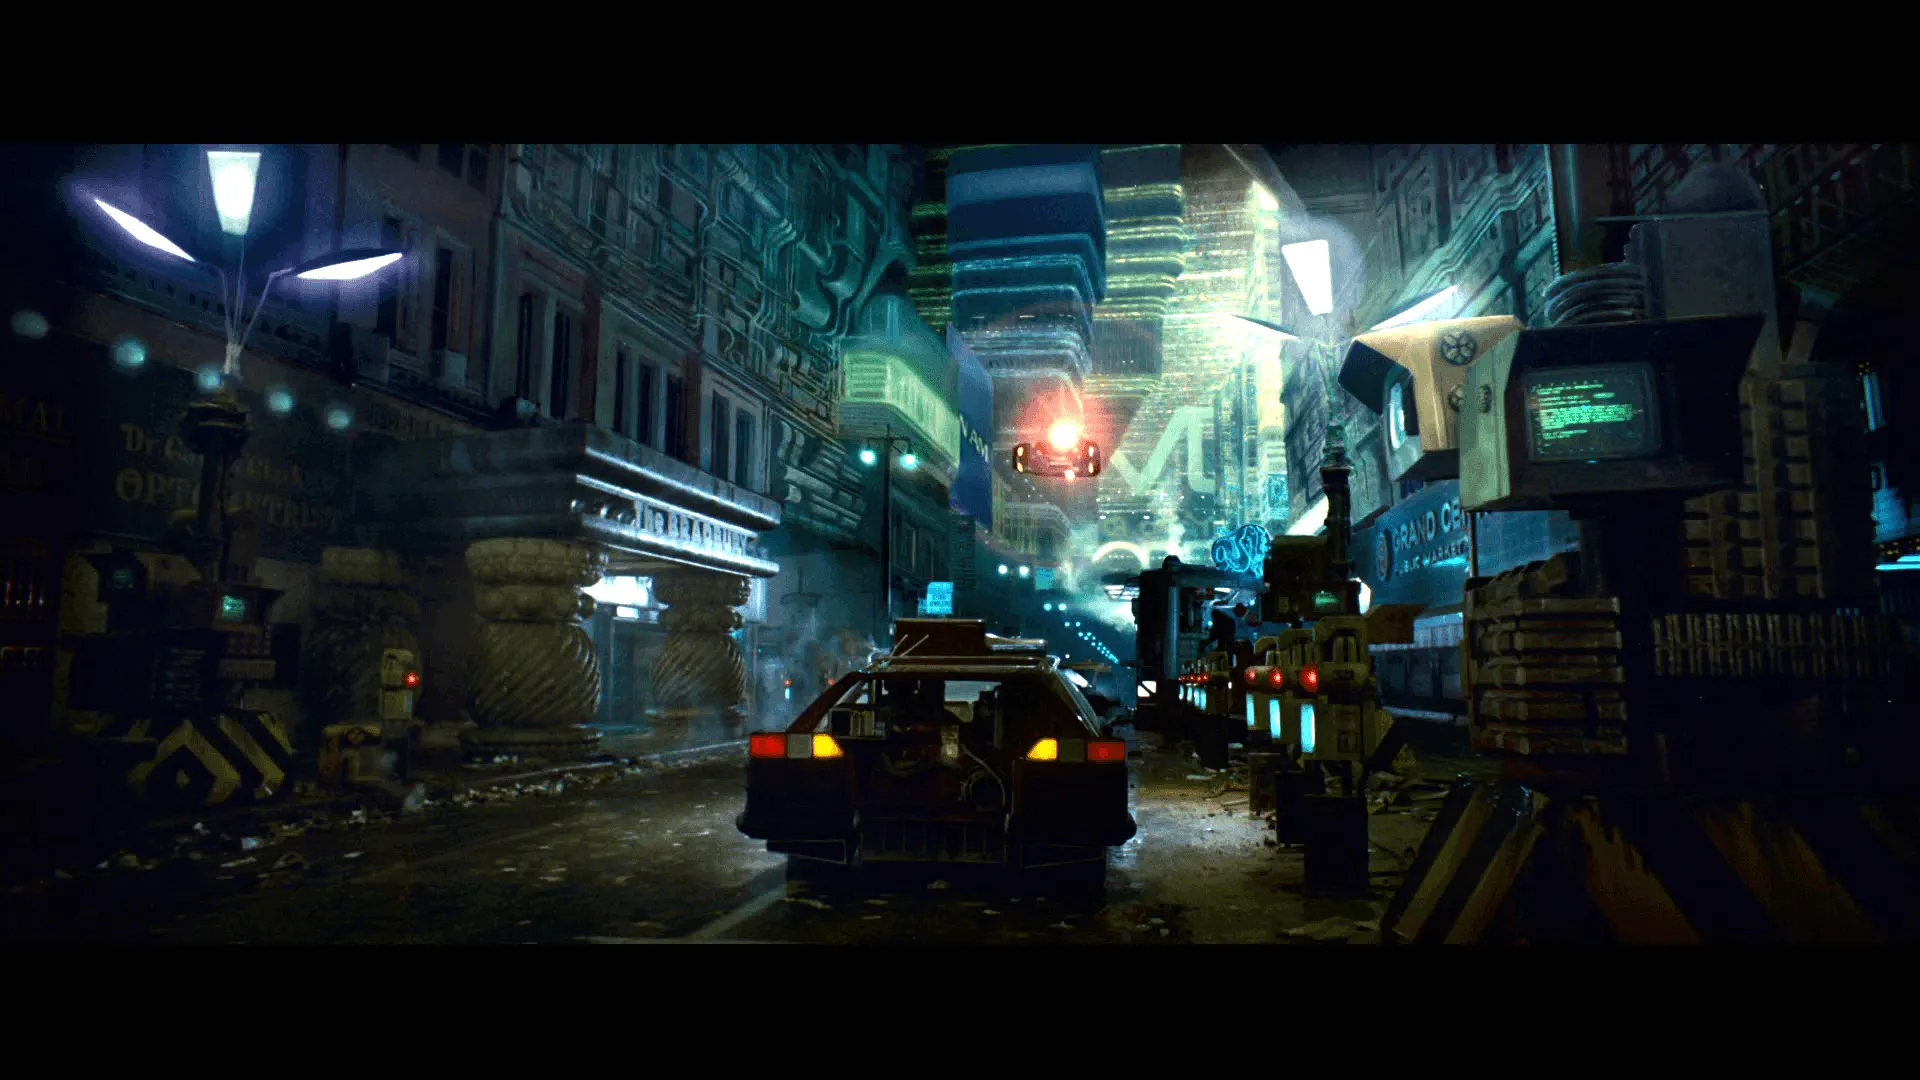 Blade Runner City Wallpapers - Top Free Blade Runner City Backgrounds ...